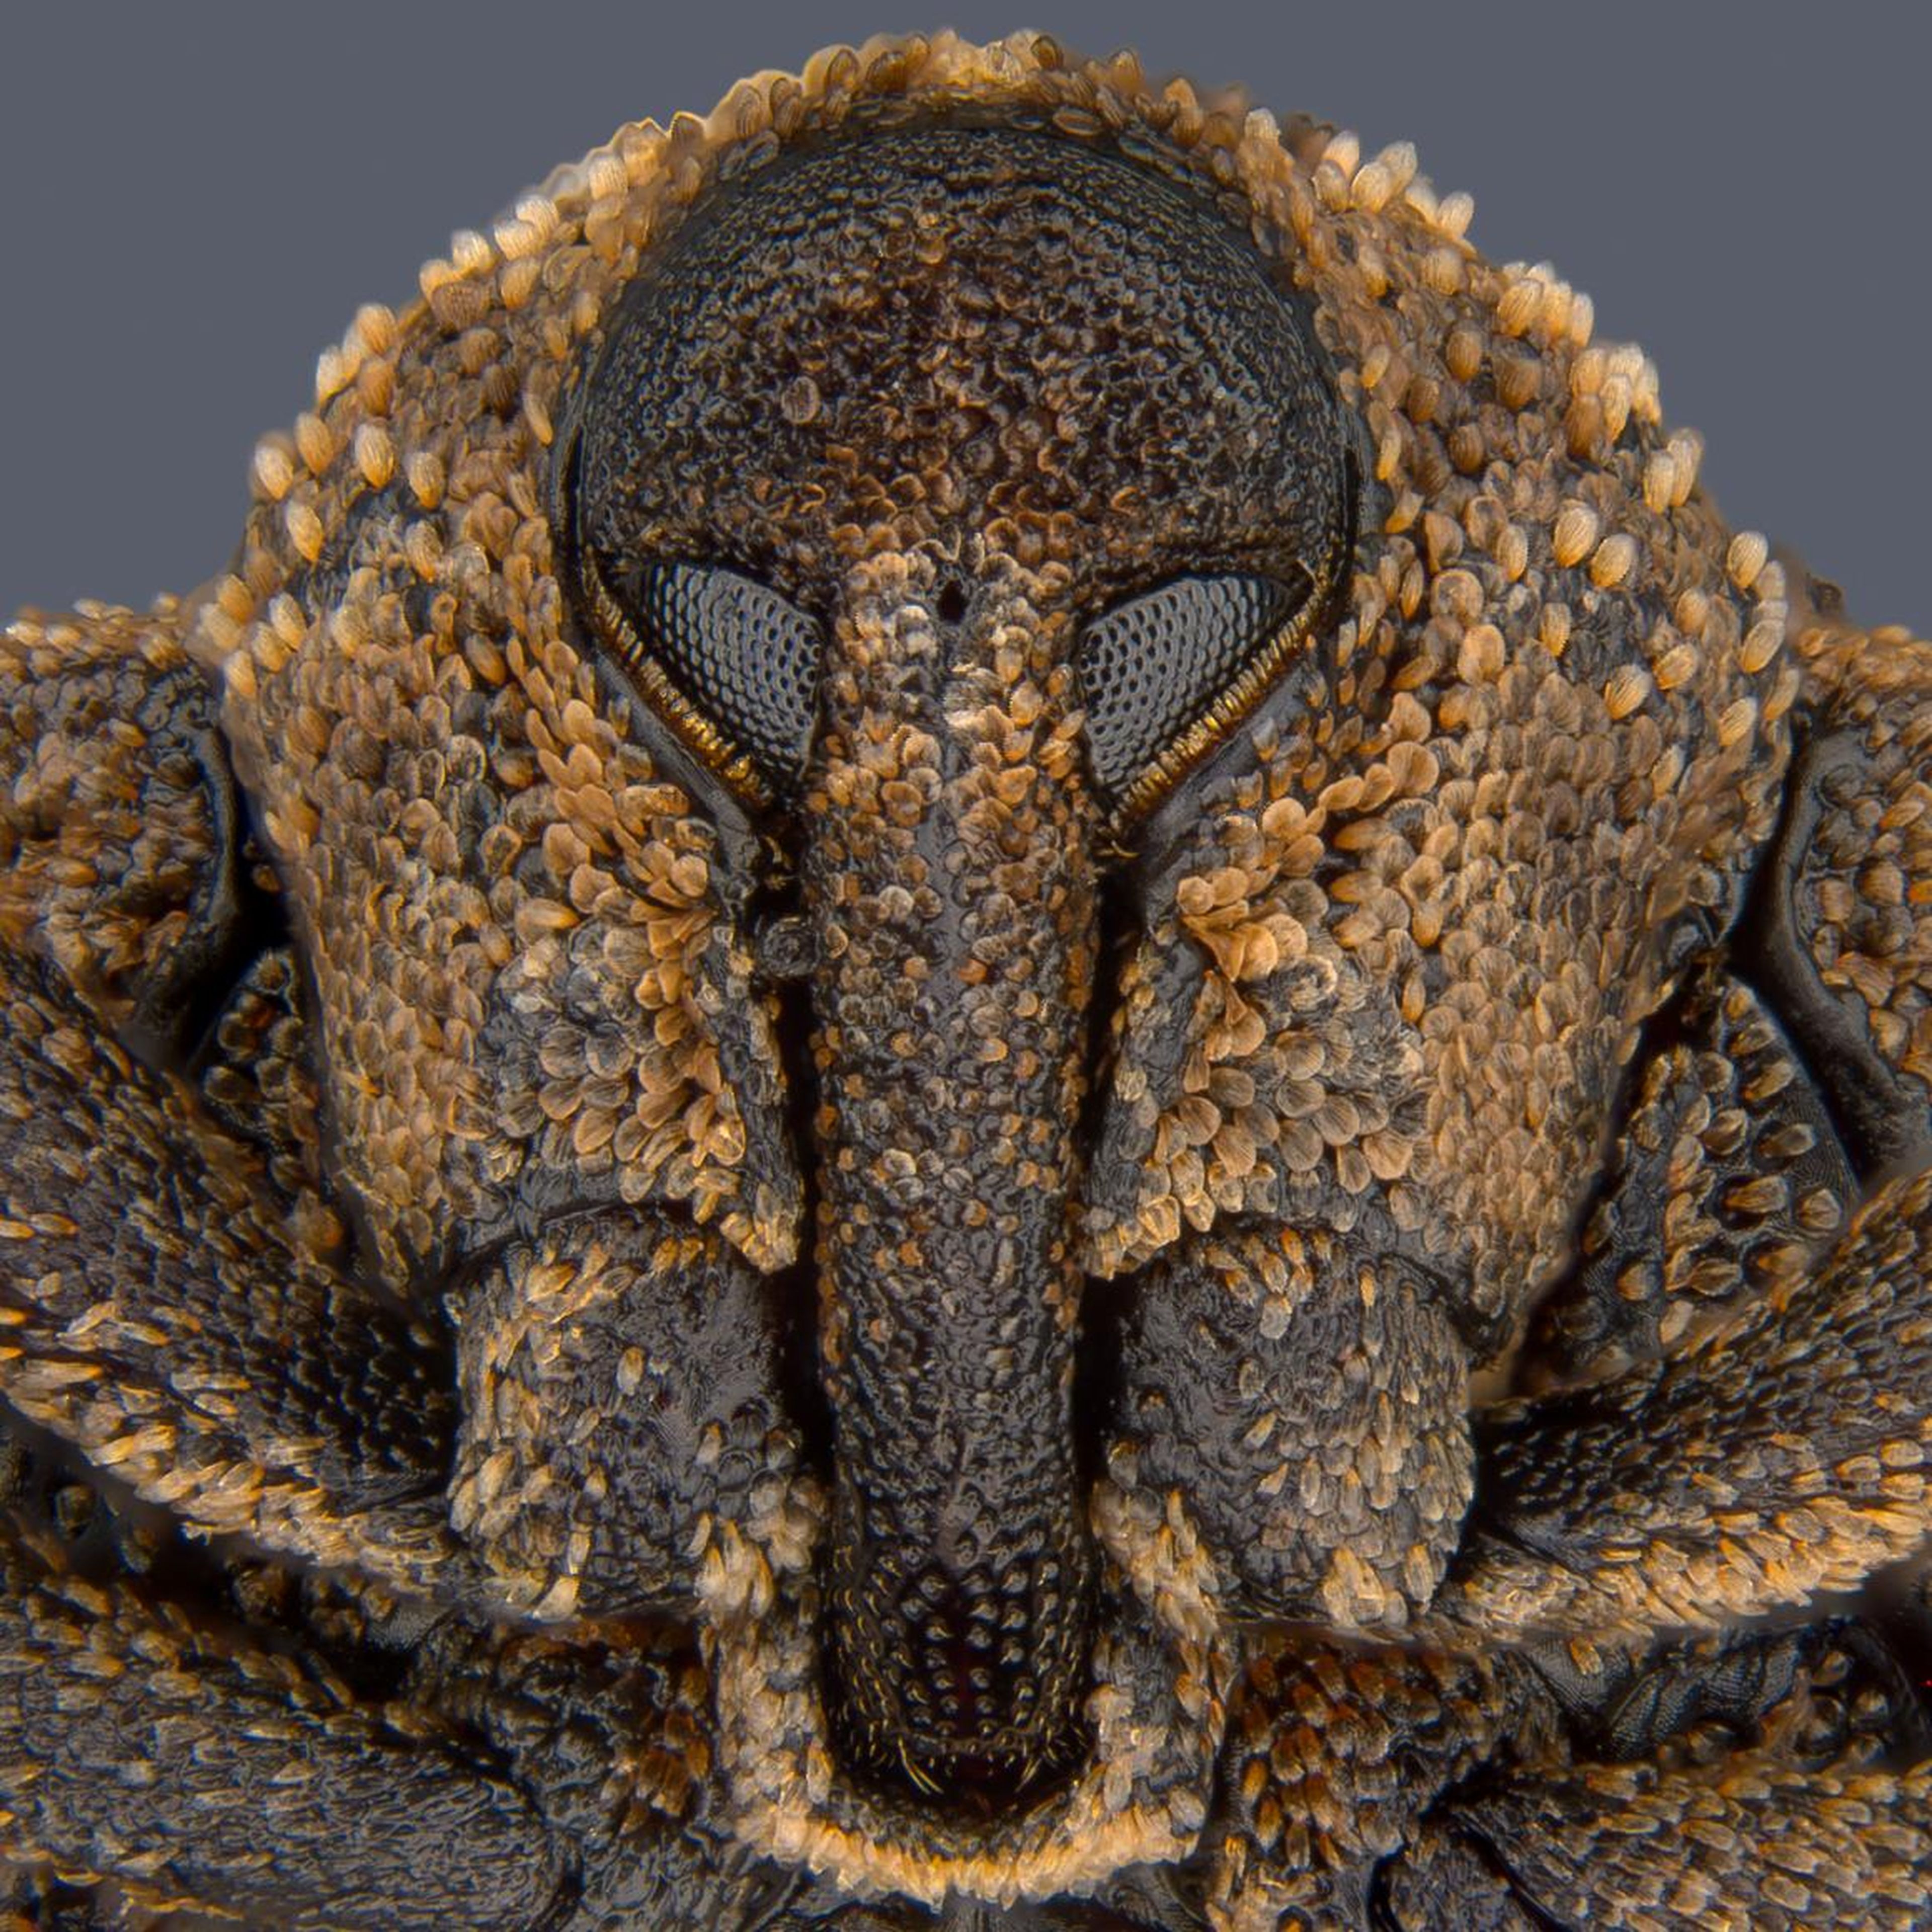 No. 8: A portrait of a very grumpy-looking mango seed weevil, or Sternochetus mangiferae.